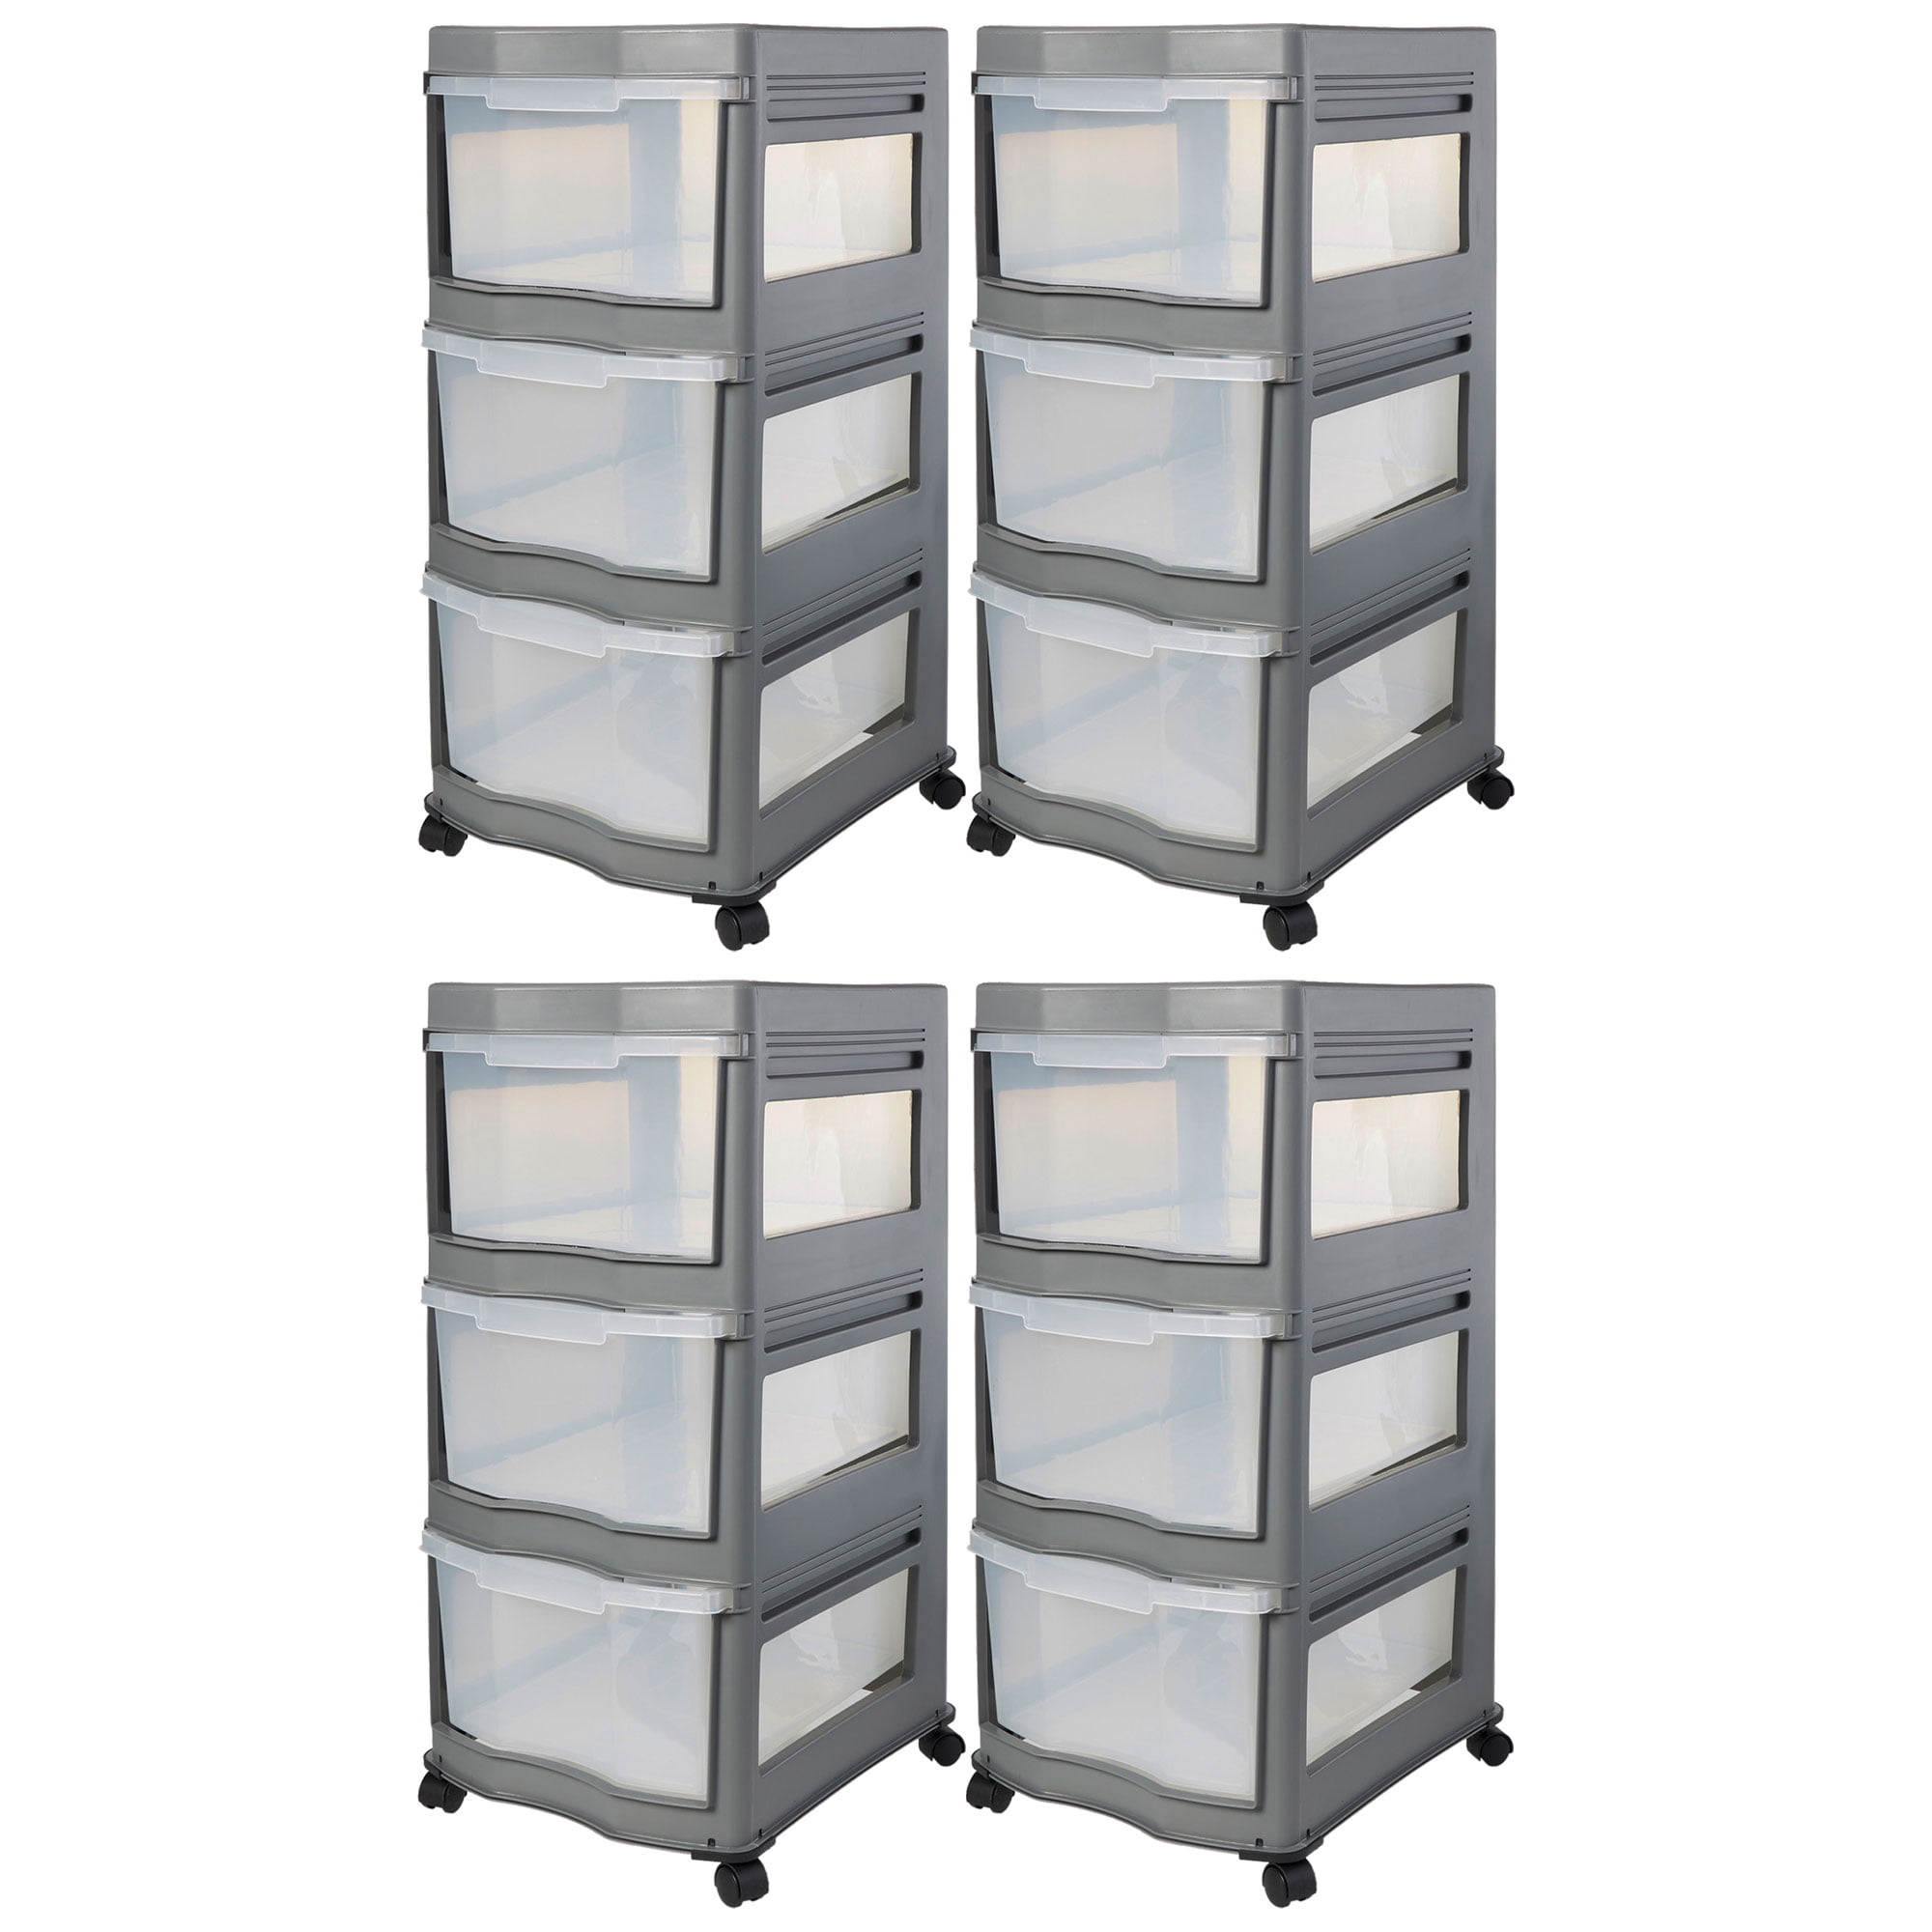 Life Story - Classic 3 Shelf Storage Container Organizer Plastic Drawers -  Gray - Venue Marketplace